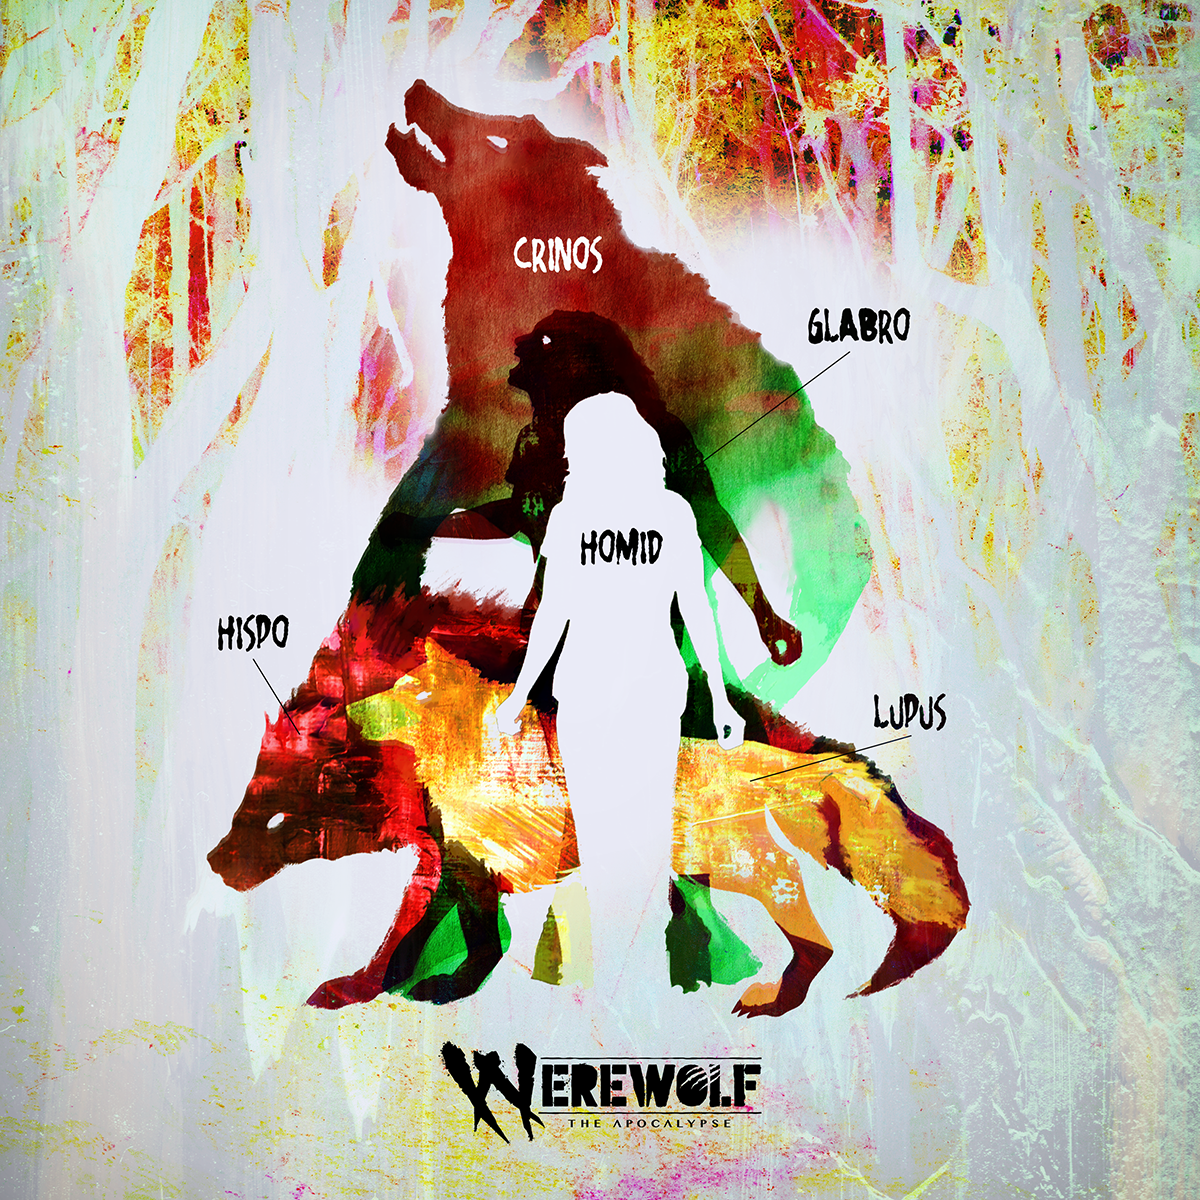 World of Darkness - Werewolf The Apocalypse Forms Infographic